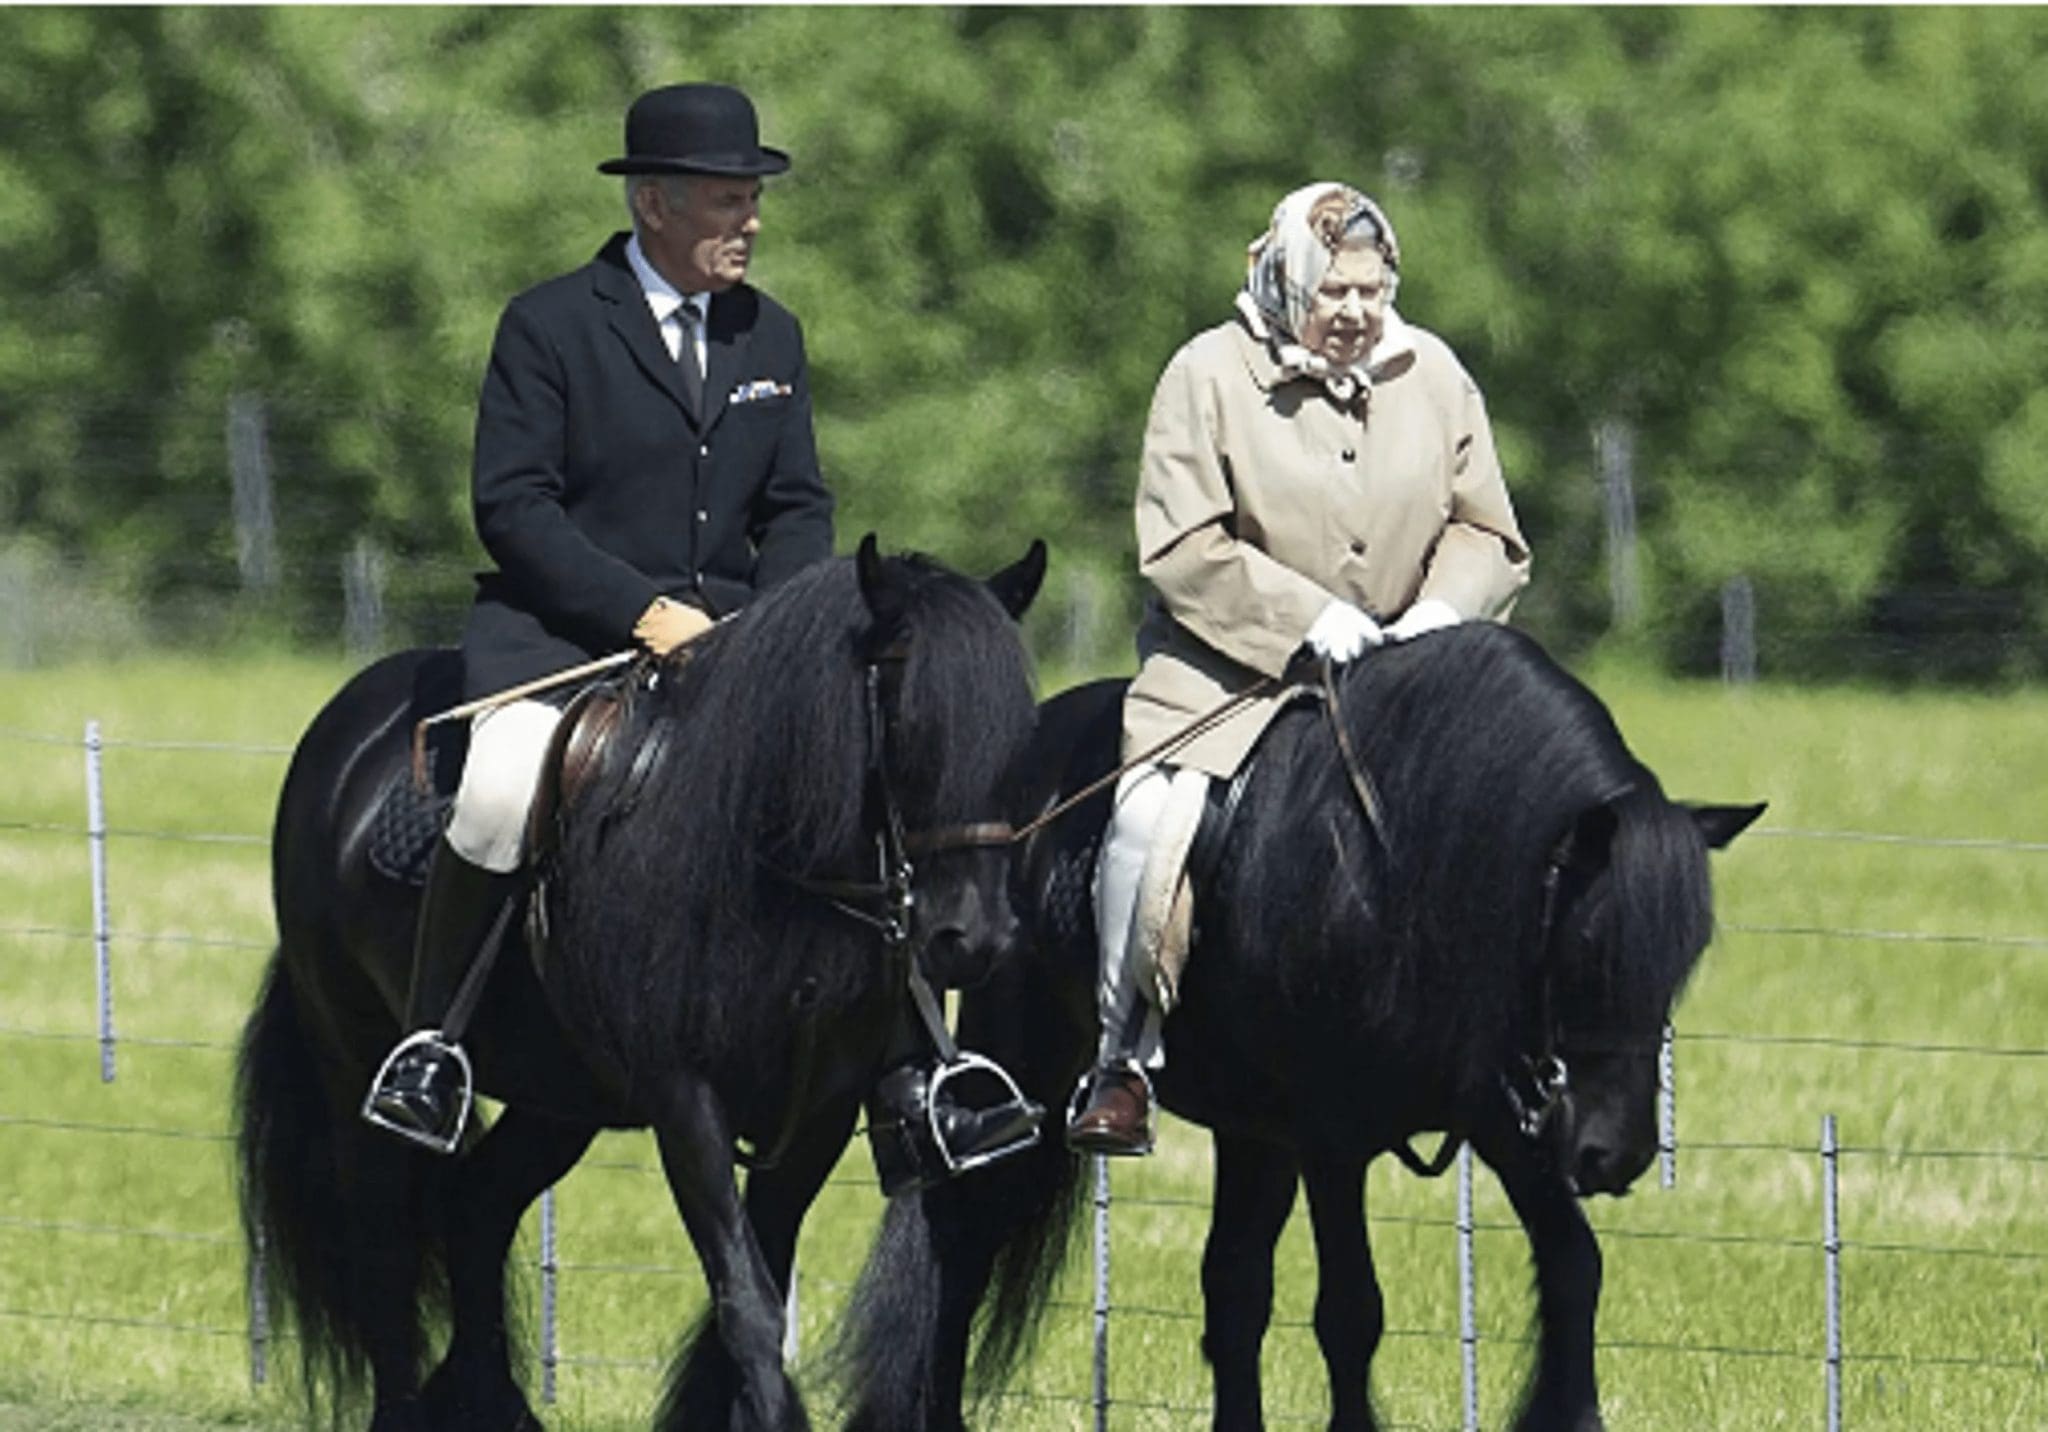 Queen Elizabeth II returned to horseback riding after a prolonged illness